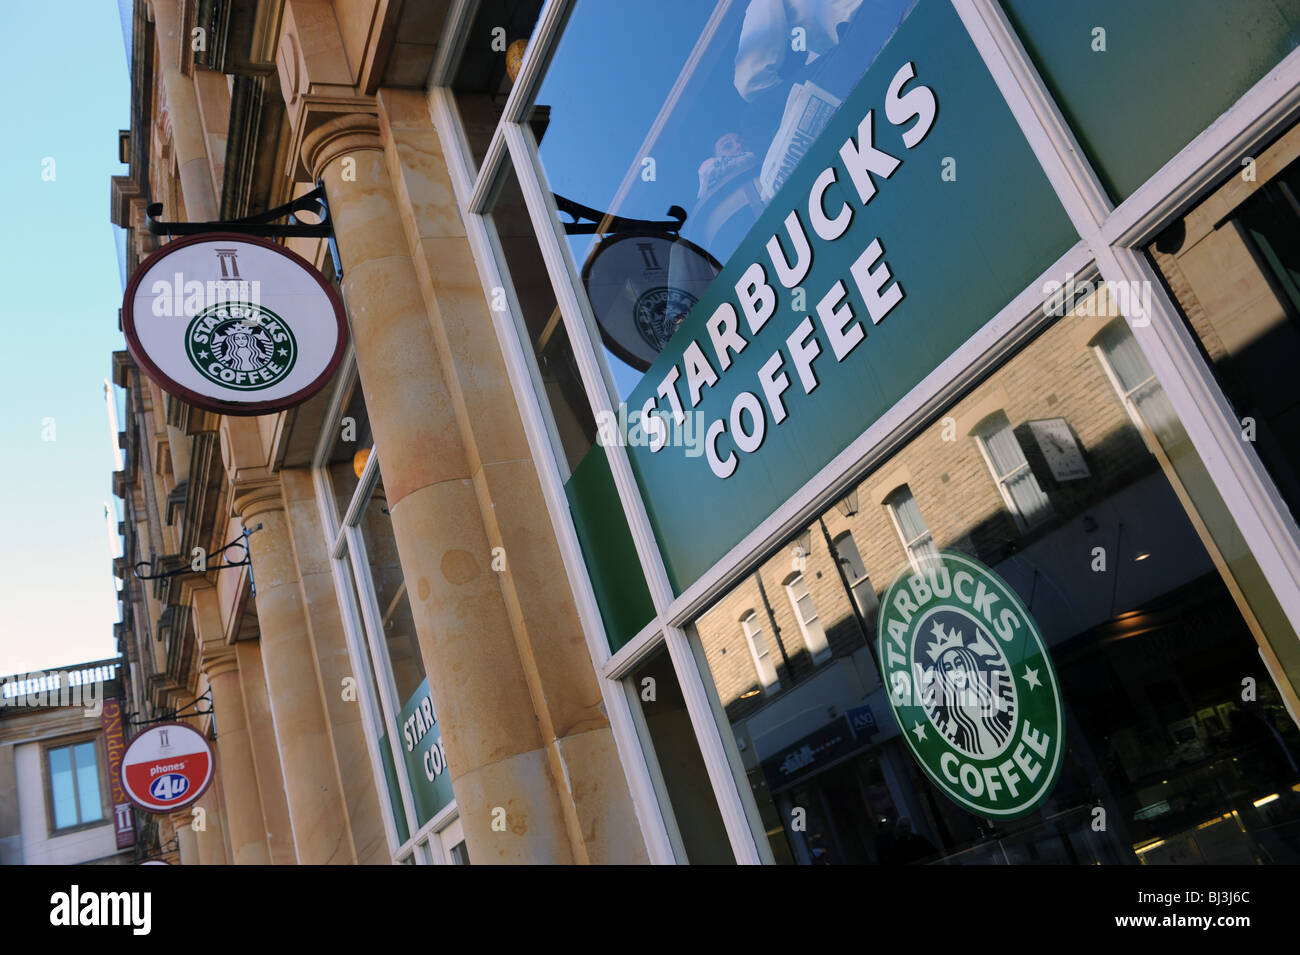 Starbucks Coffee shop sign and logo Harrogate North Yorkshire England Uk Stock Photo